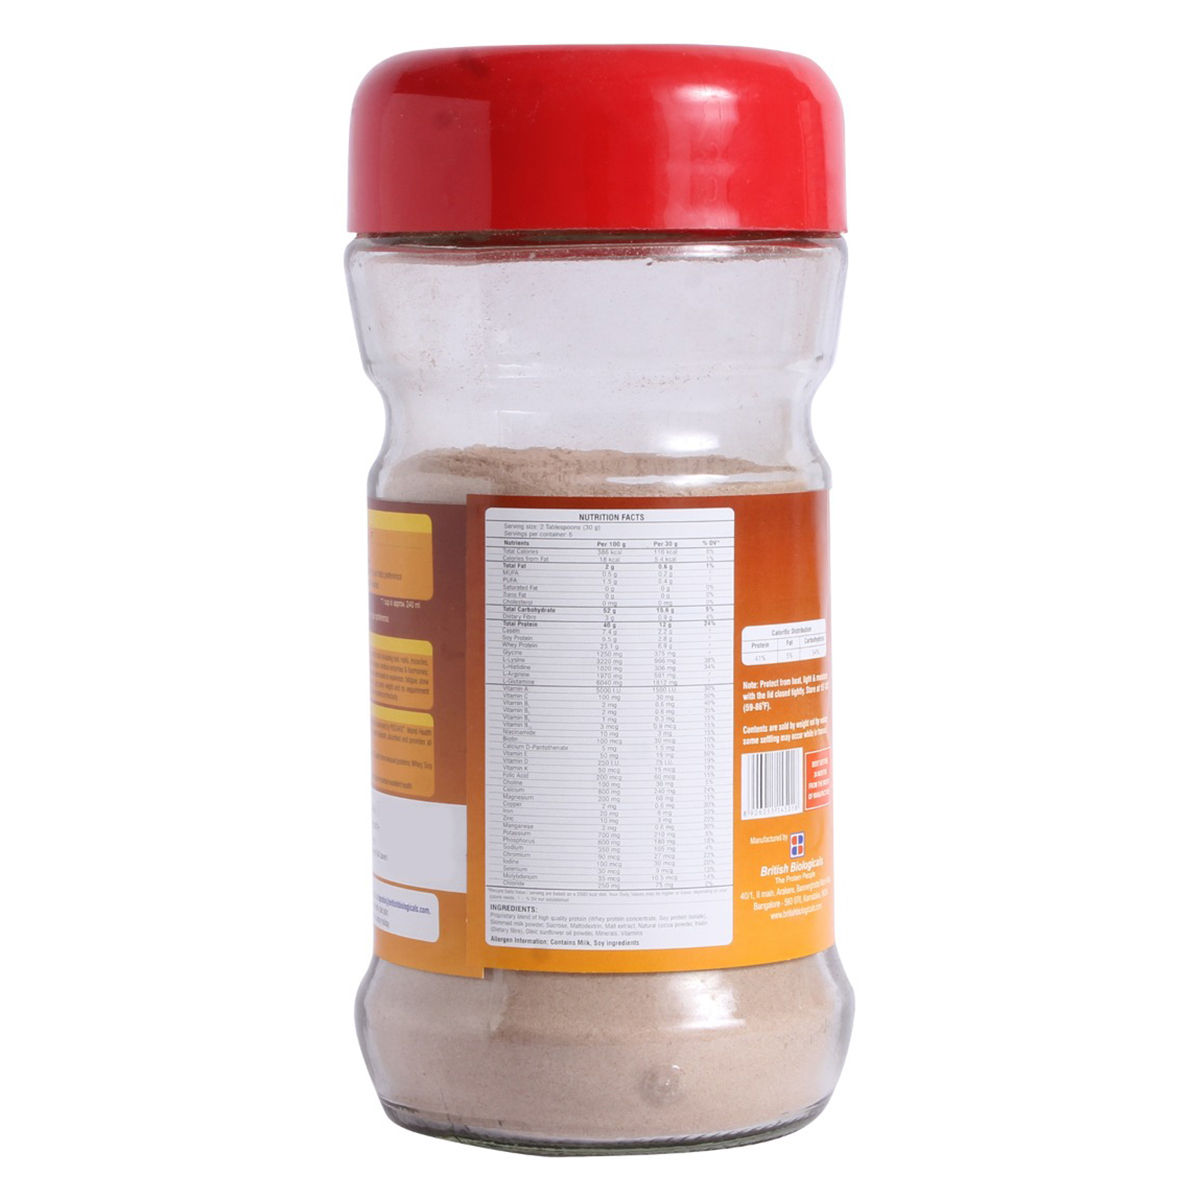 B-Protin Chocolate Flavour Powder, 200 gm Jar, Pack of 1 